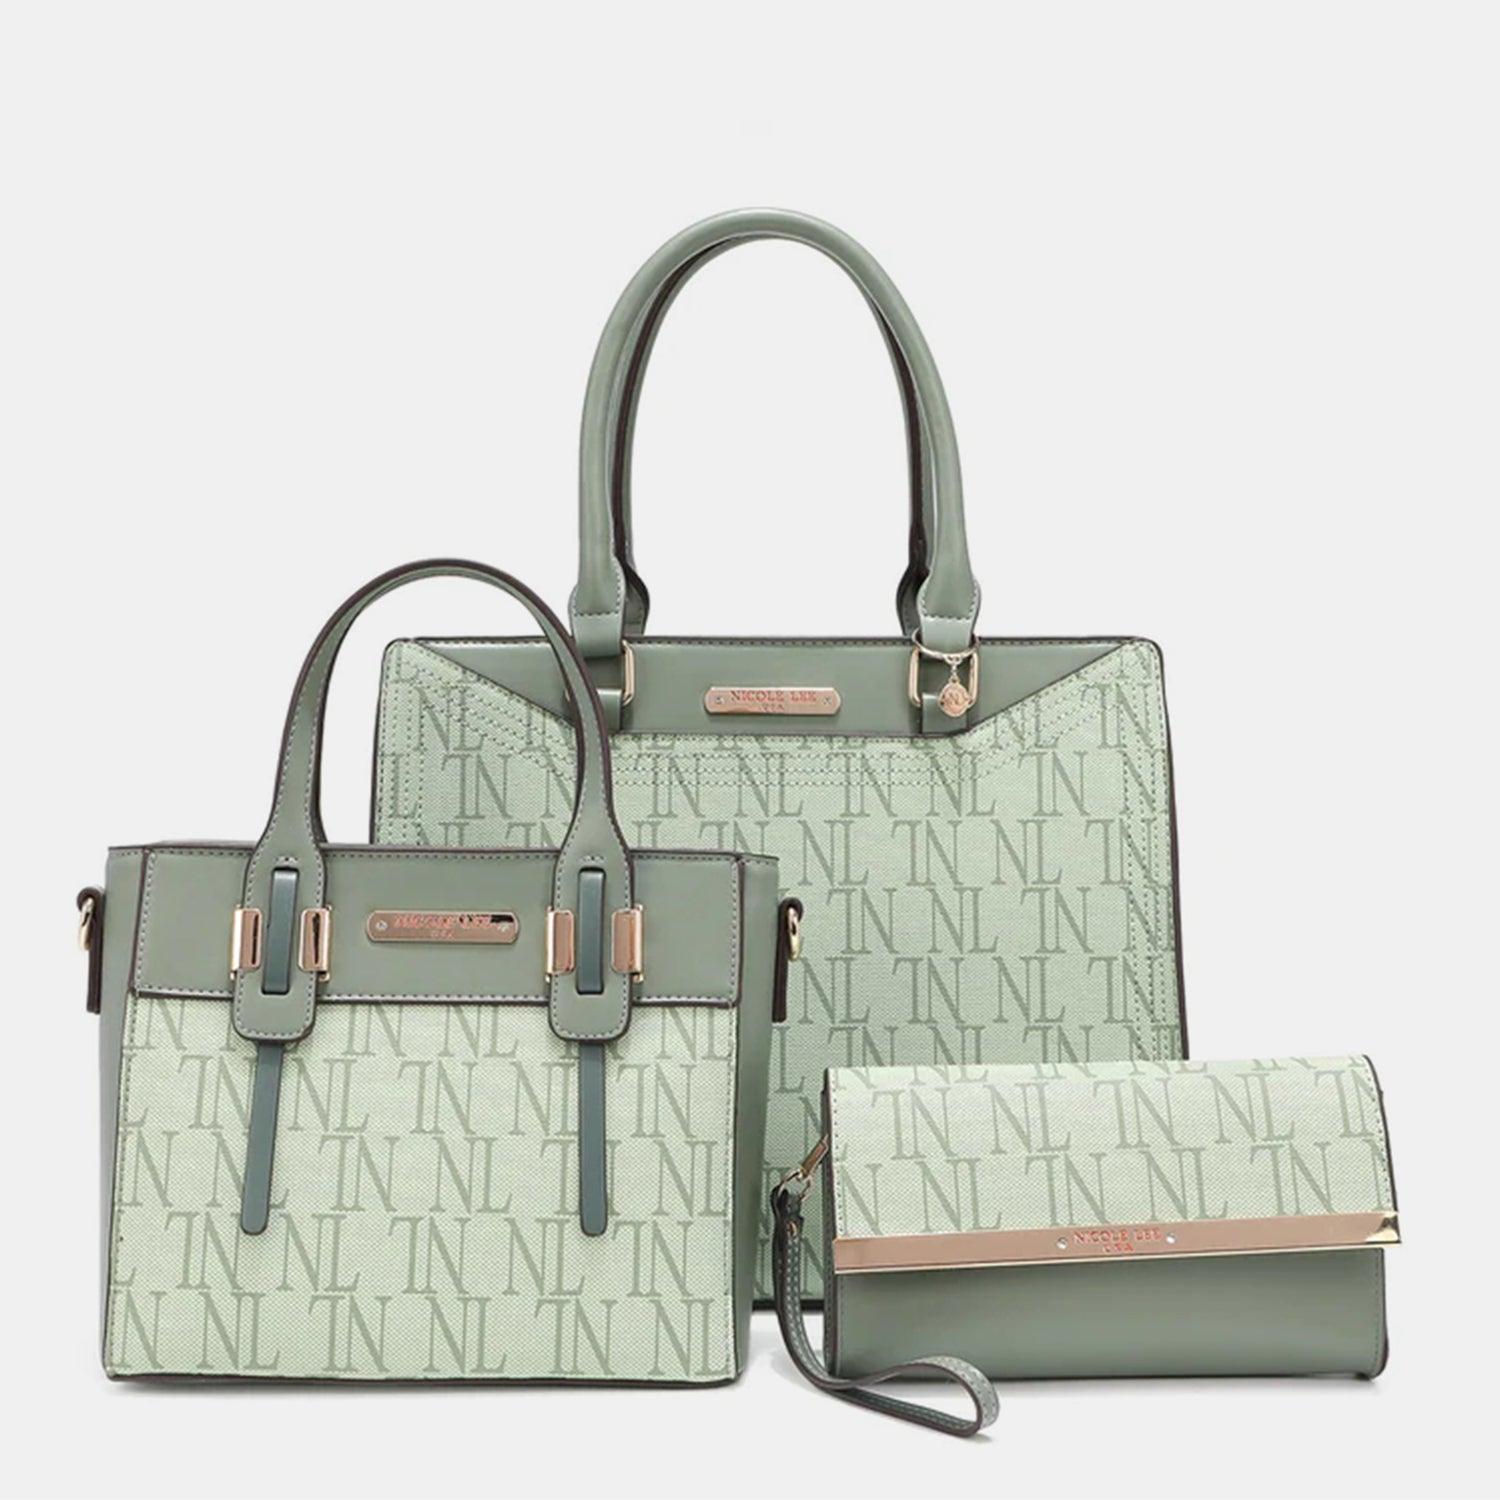 a green and white handbag and wallet